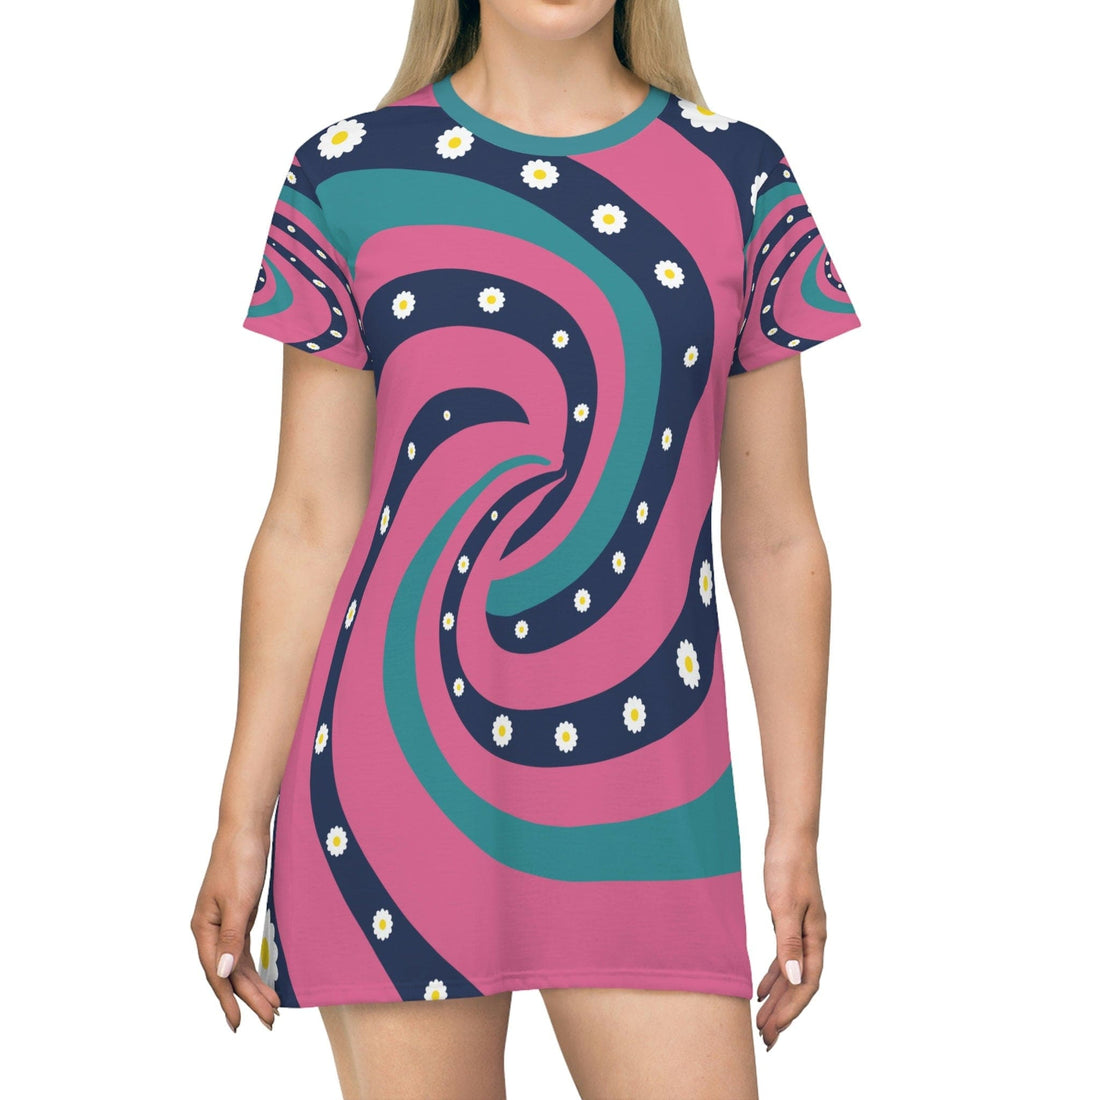 Kate McEnroe New York Retro 70s Psychedelic Groovy Swirl Flower Power Tshirt Dress in Mid Century Modern Teal Blue, Pink, Navy, MCM Summer Party Dress, Beach WearDresses28874908967916715646